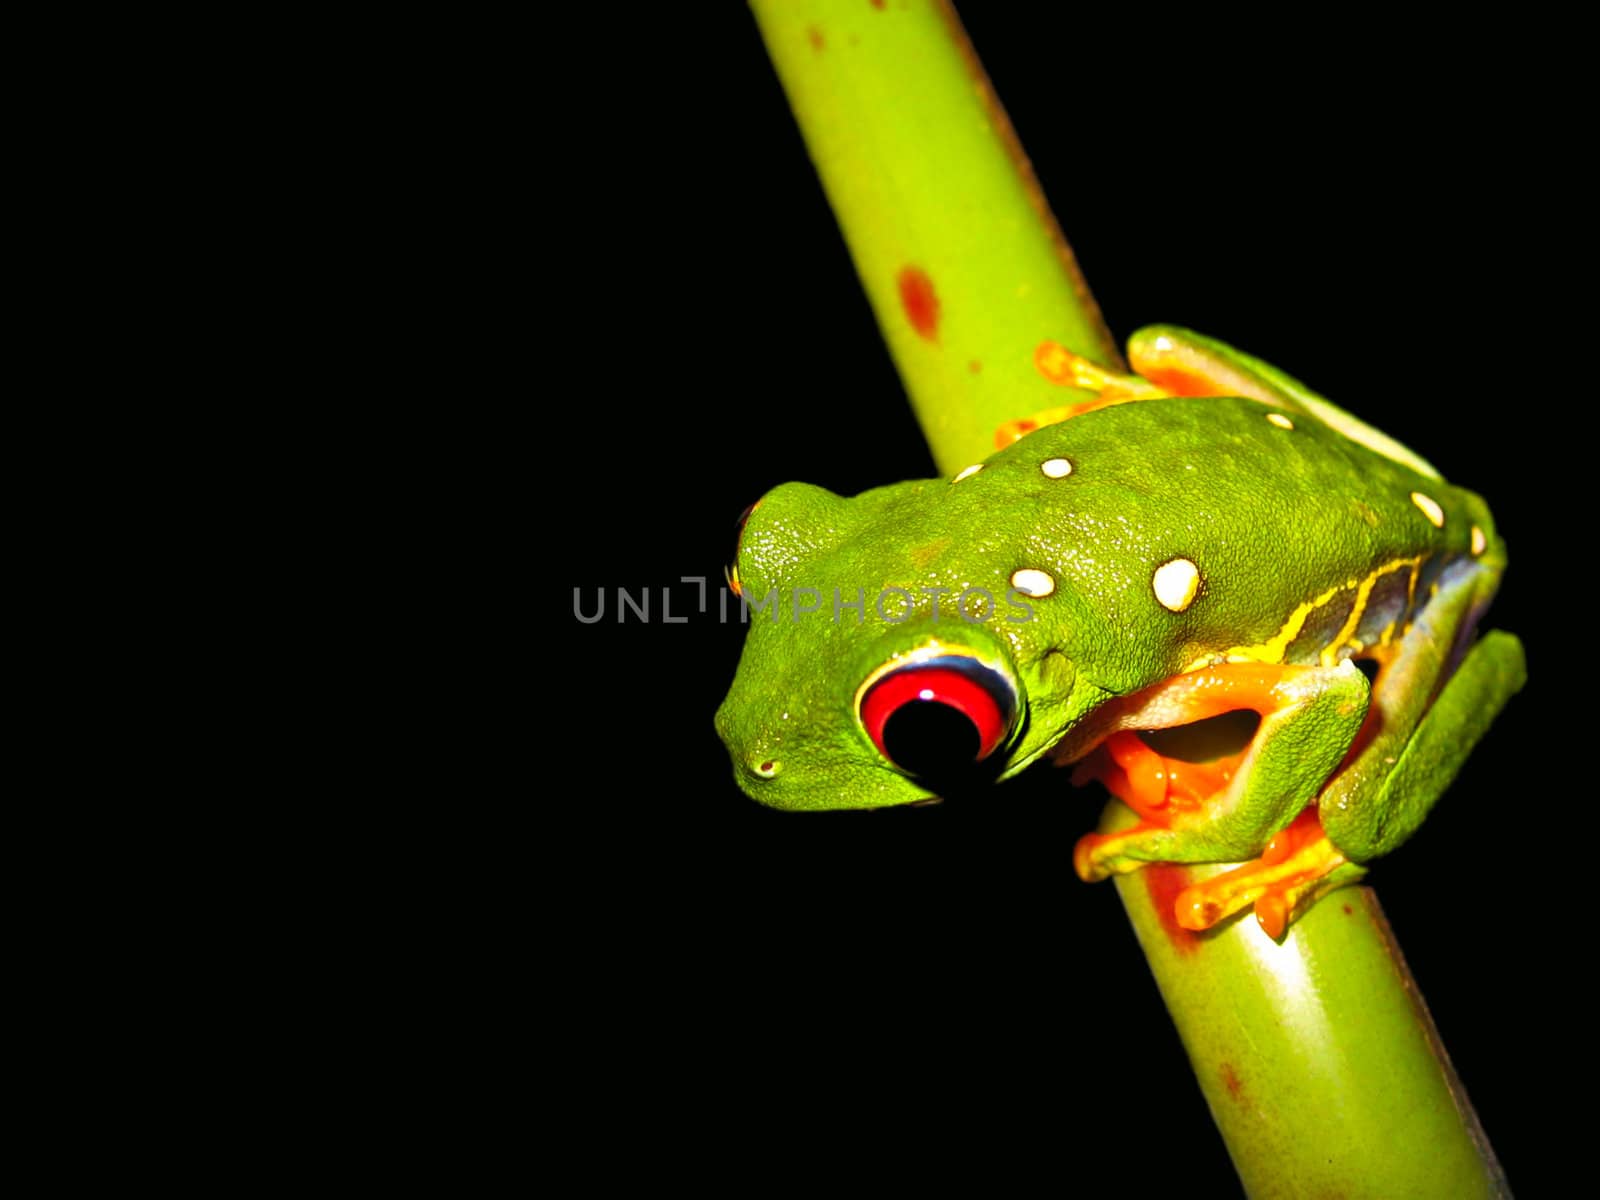 red eye tree frog by karinclaus